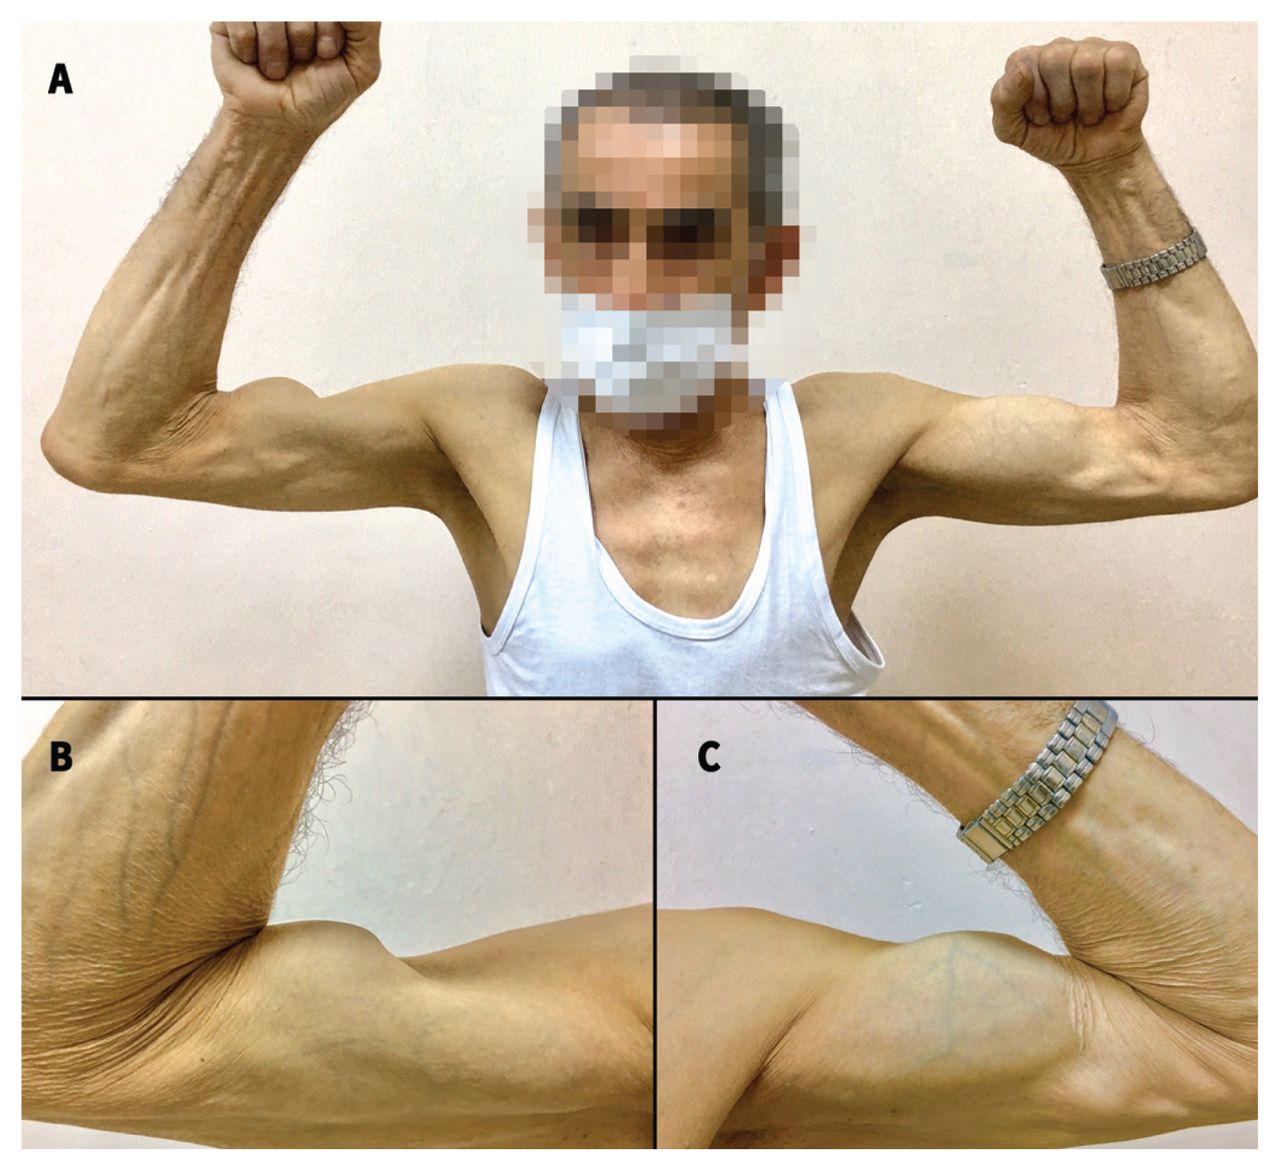 Popeye deformity” associated with proximal biceps tendon rupture